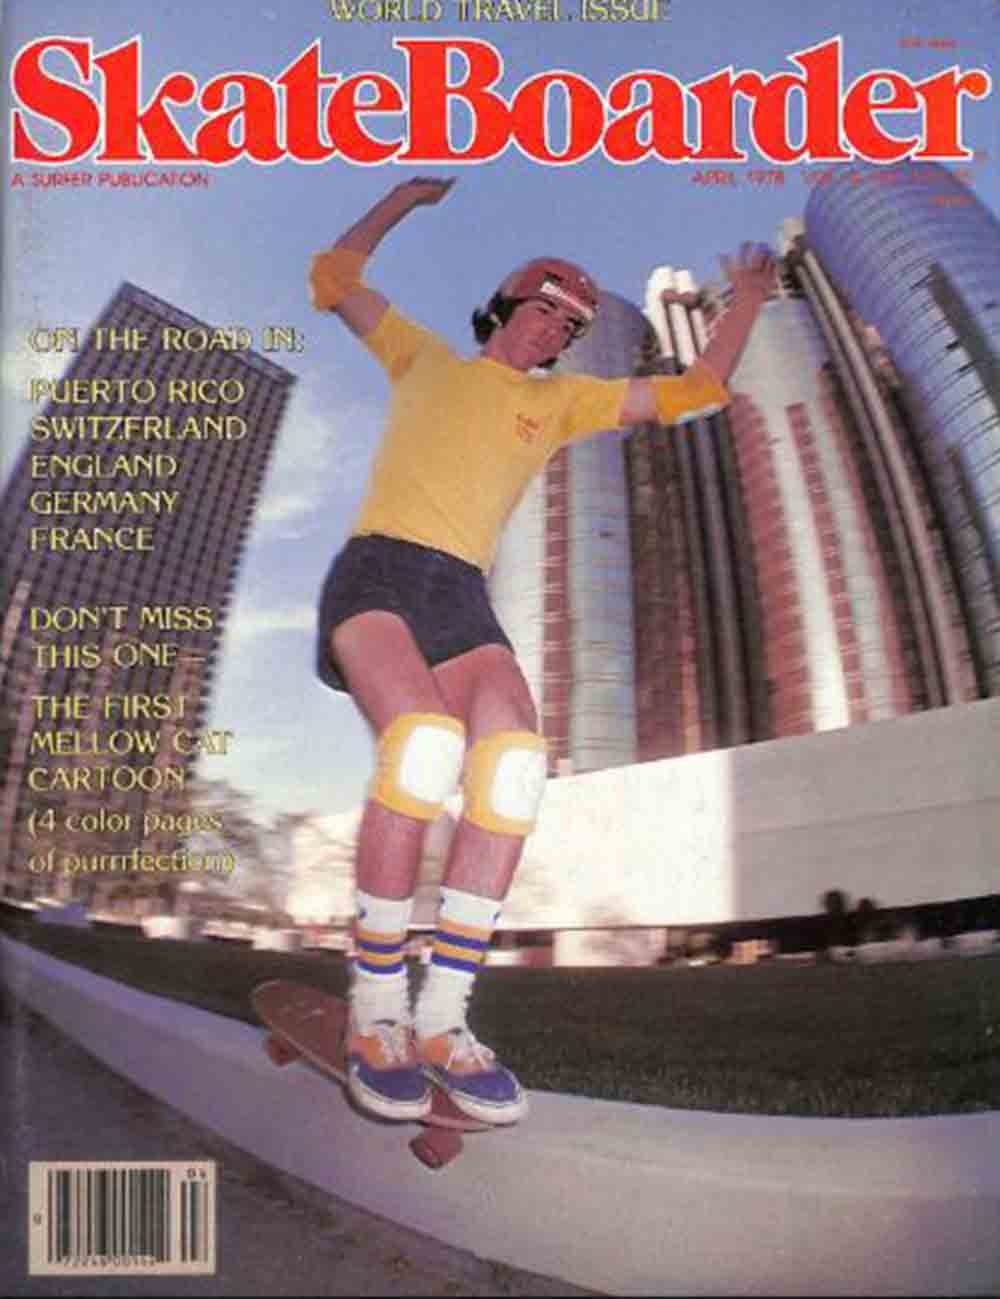 SkateBoarder Vol. 4 # 9 magazine back issue SkateBoarder magizine back copy 